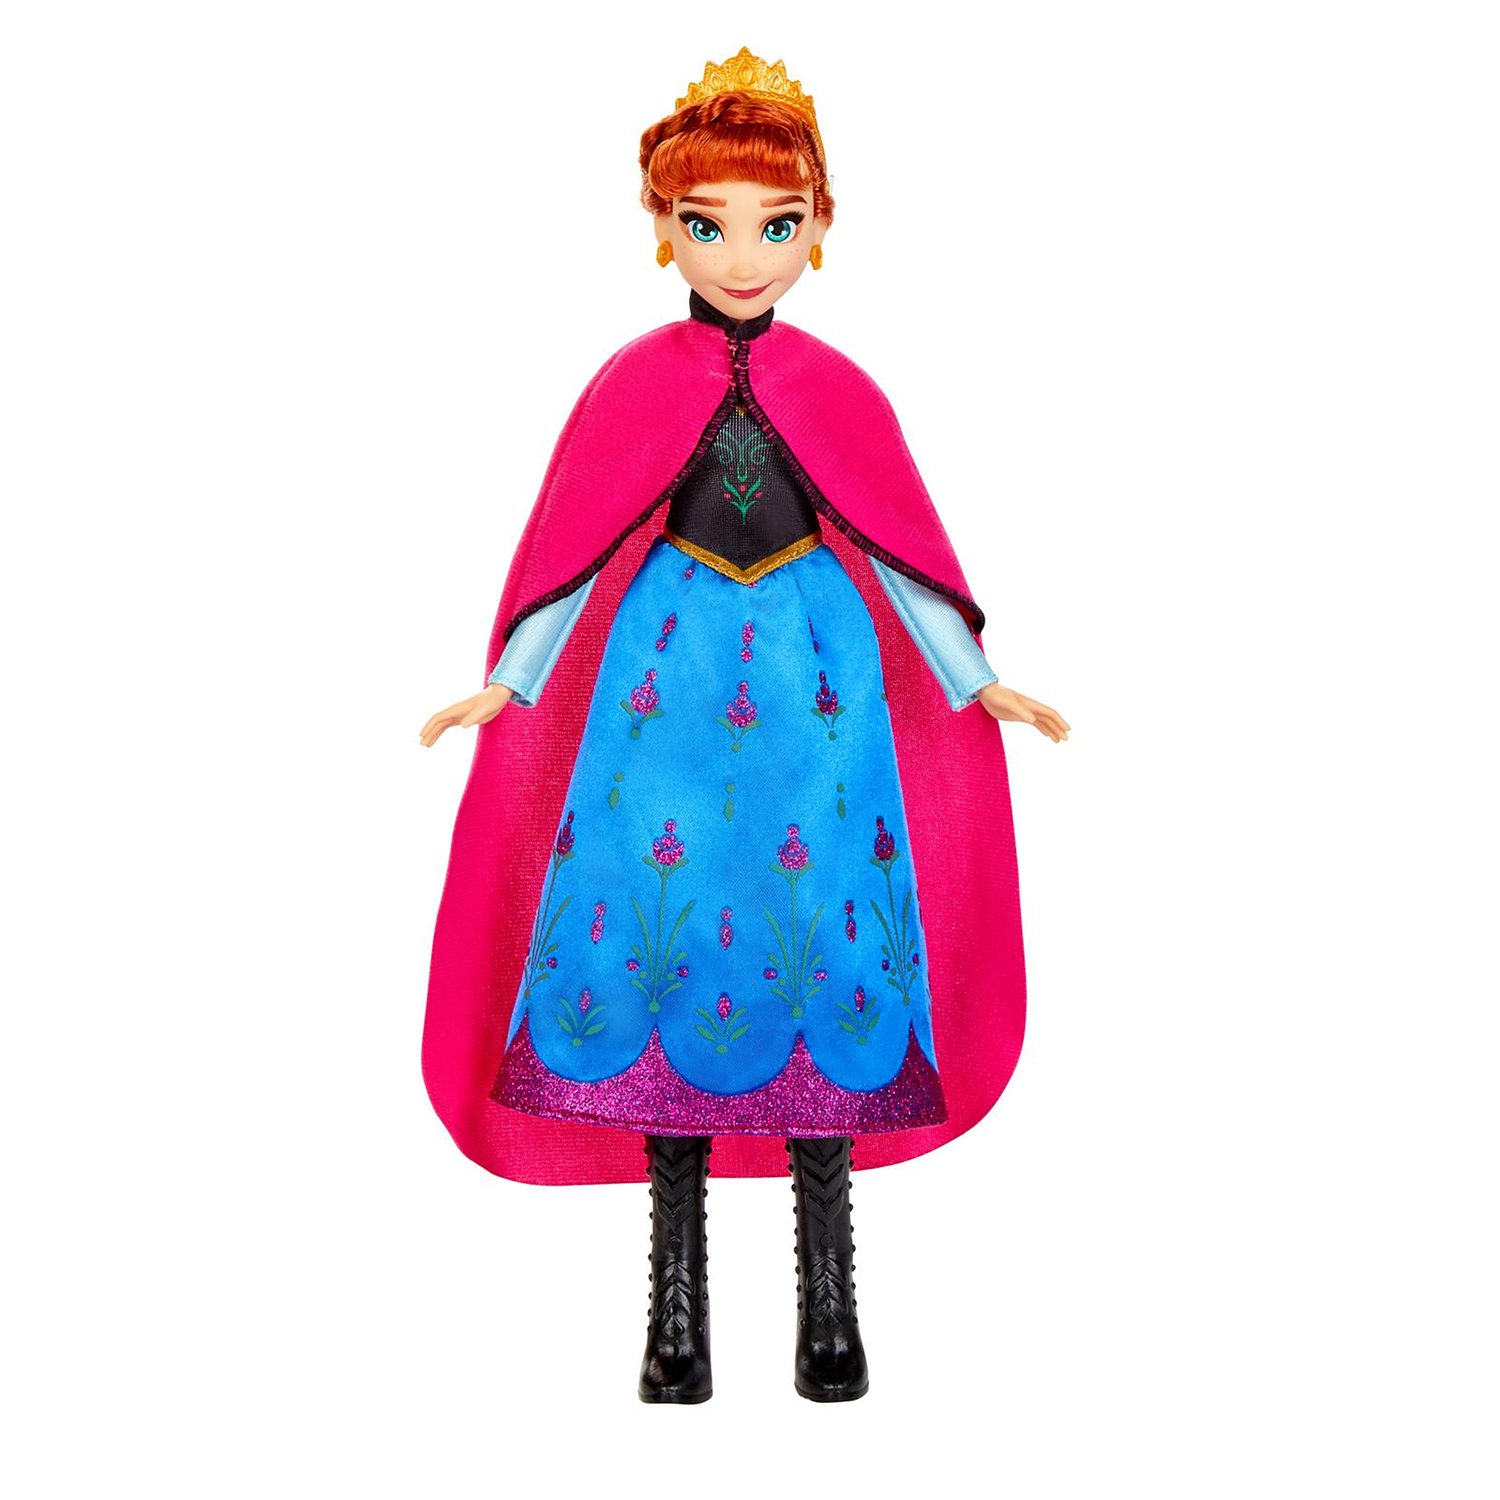 Кукла Disney Frozen E96685L0 Холодное Сердце 2 Анна 2 наряда